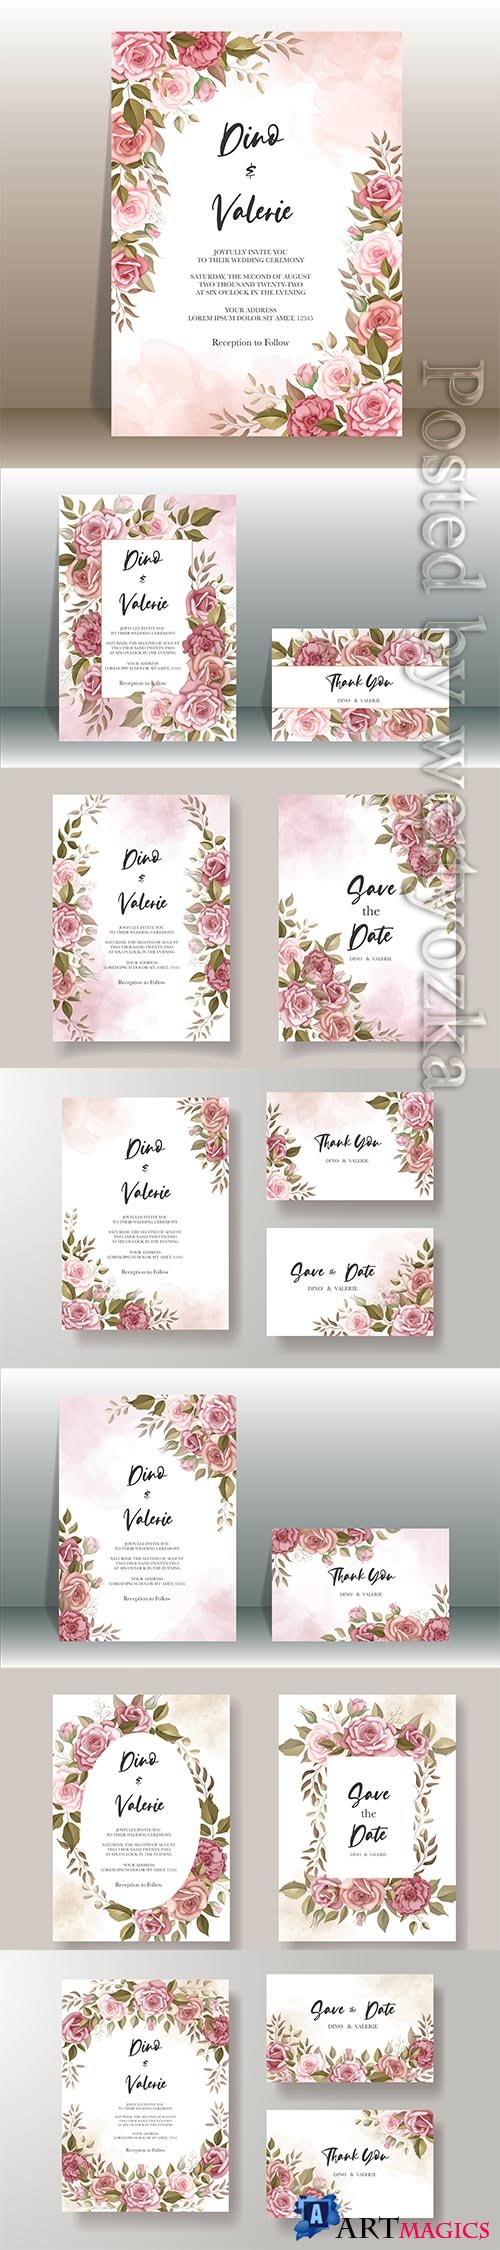 Beautiful wedding invitation card with rose decoration